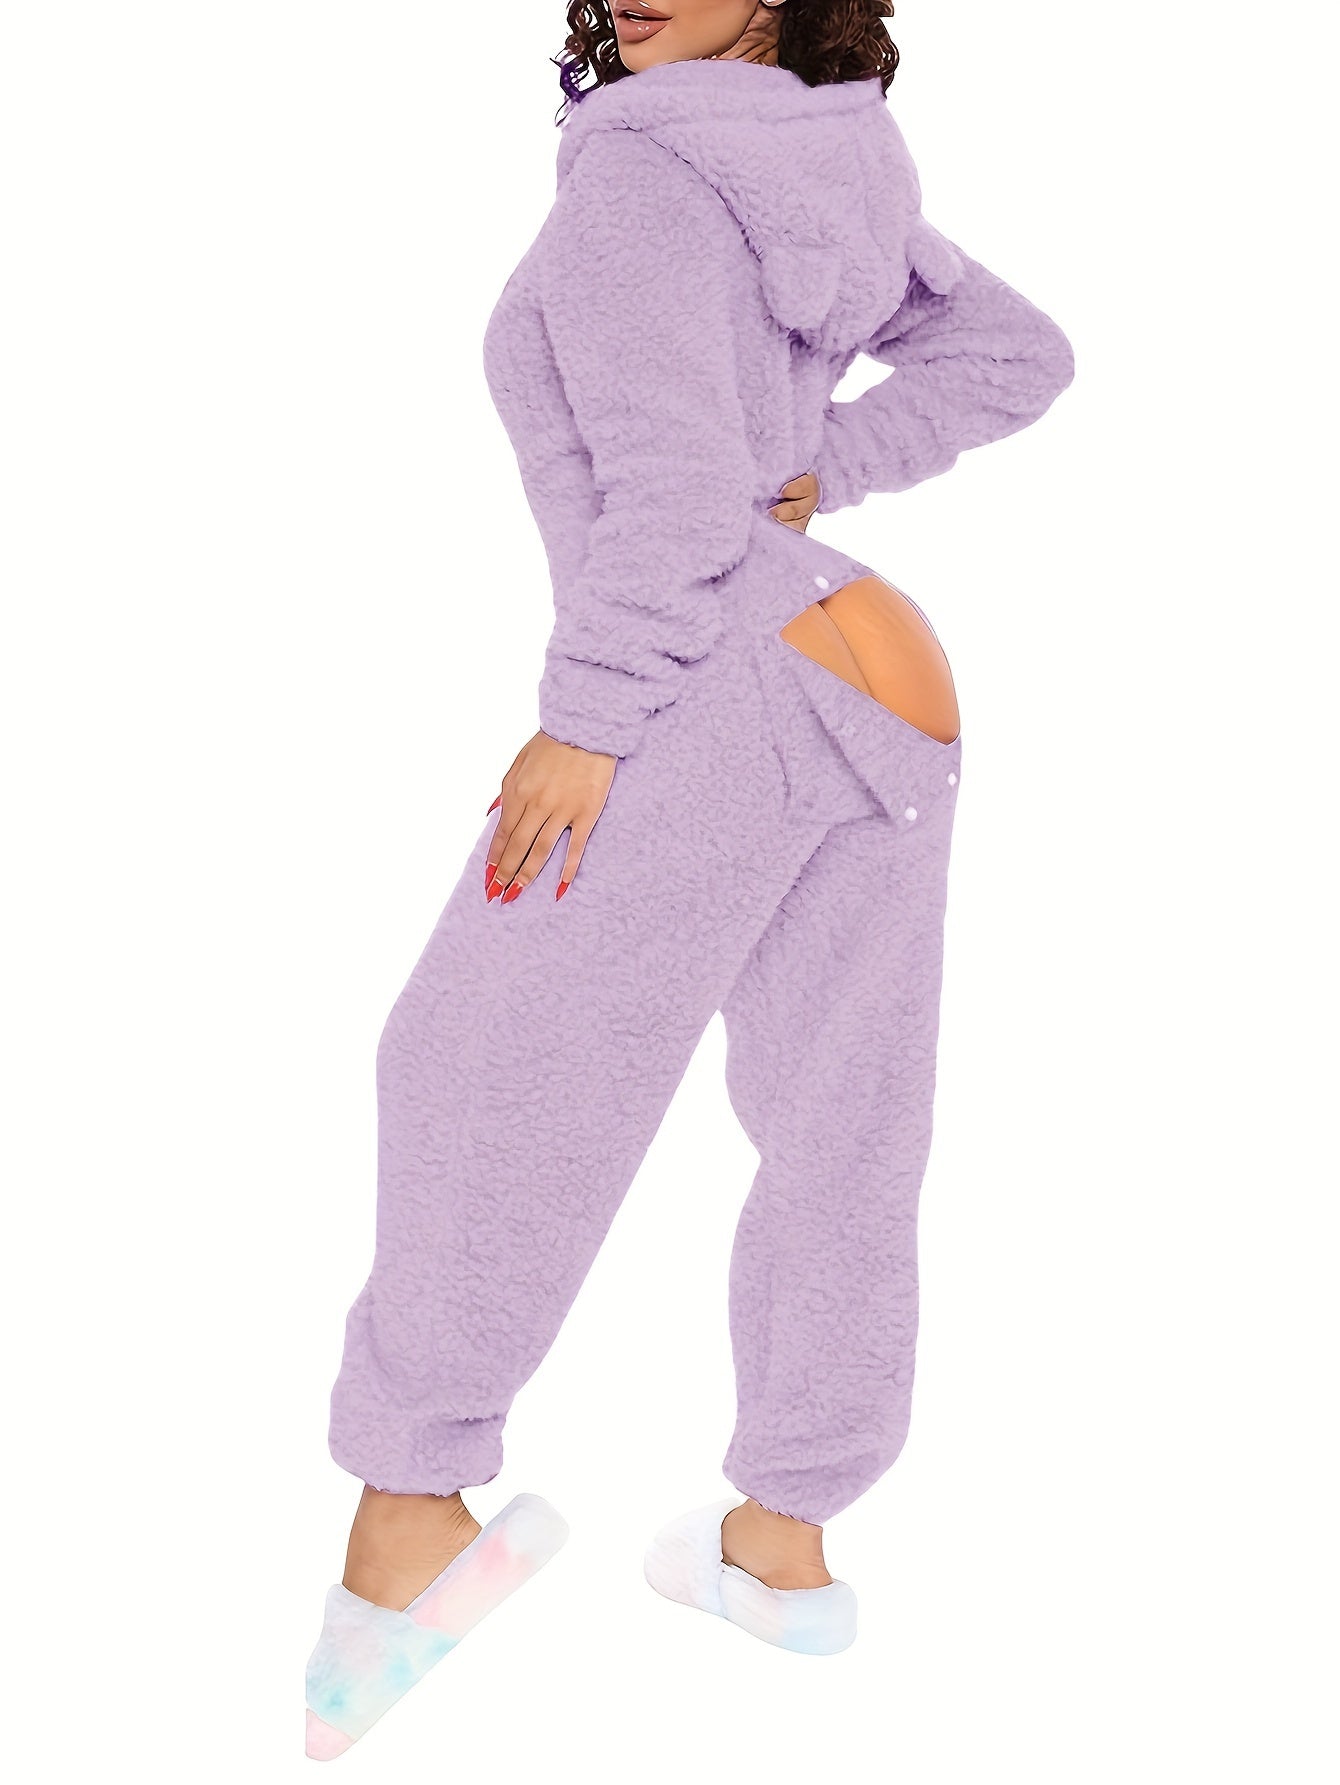 Solid Hooded Fuzzy Pajama Jumpsuit, Comfy Long Sleeve Zipper Pajamas, Women's Lingerie & Sleepwear